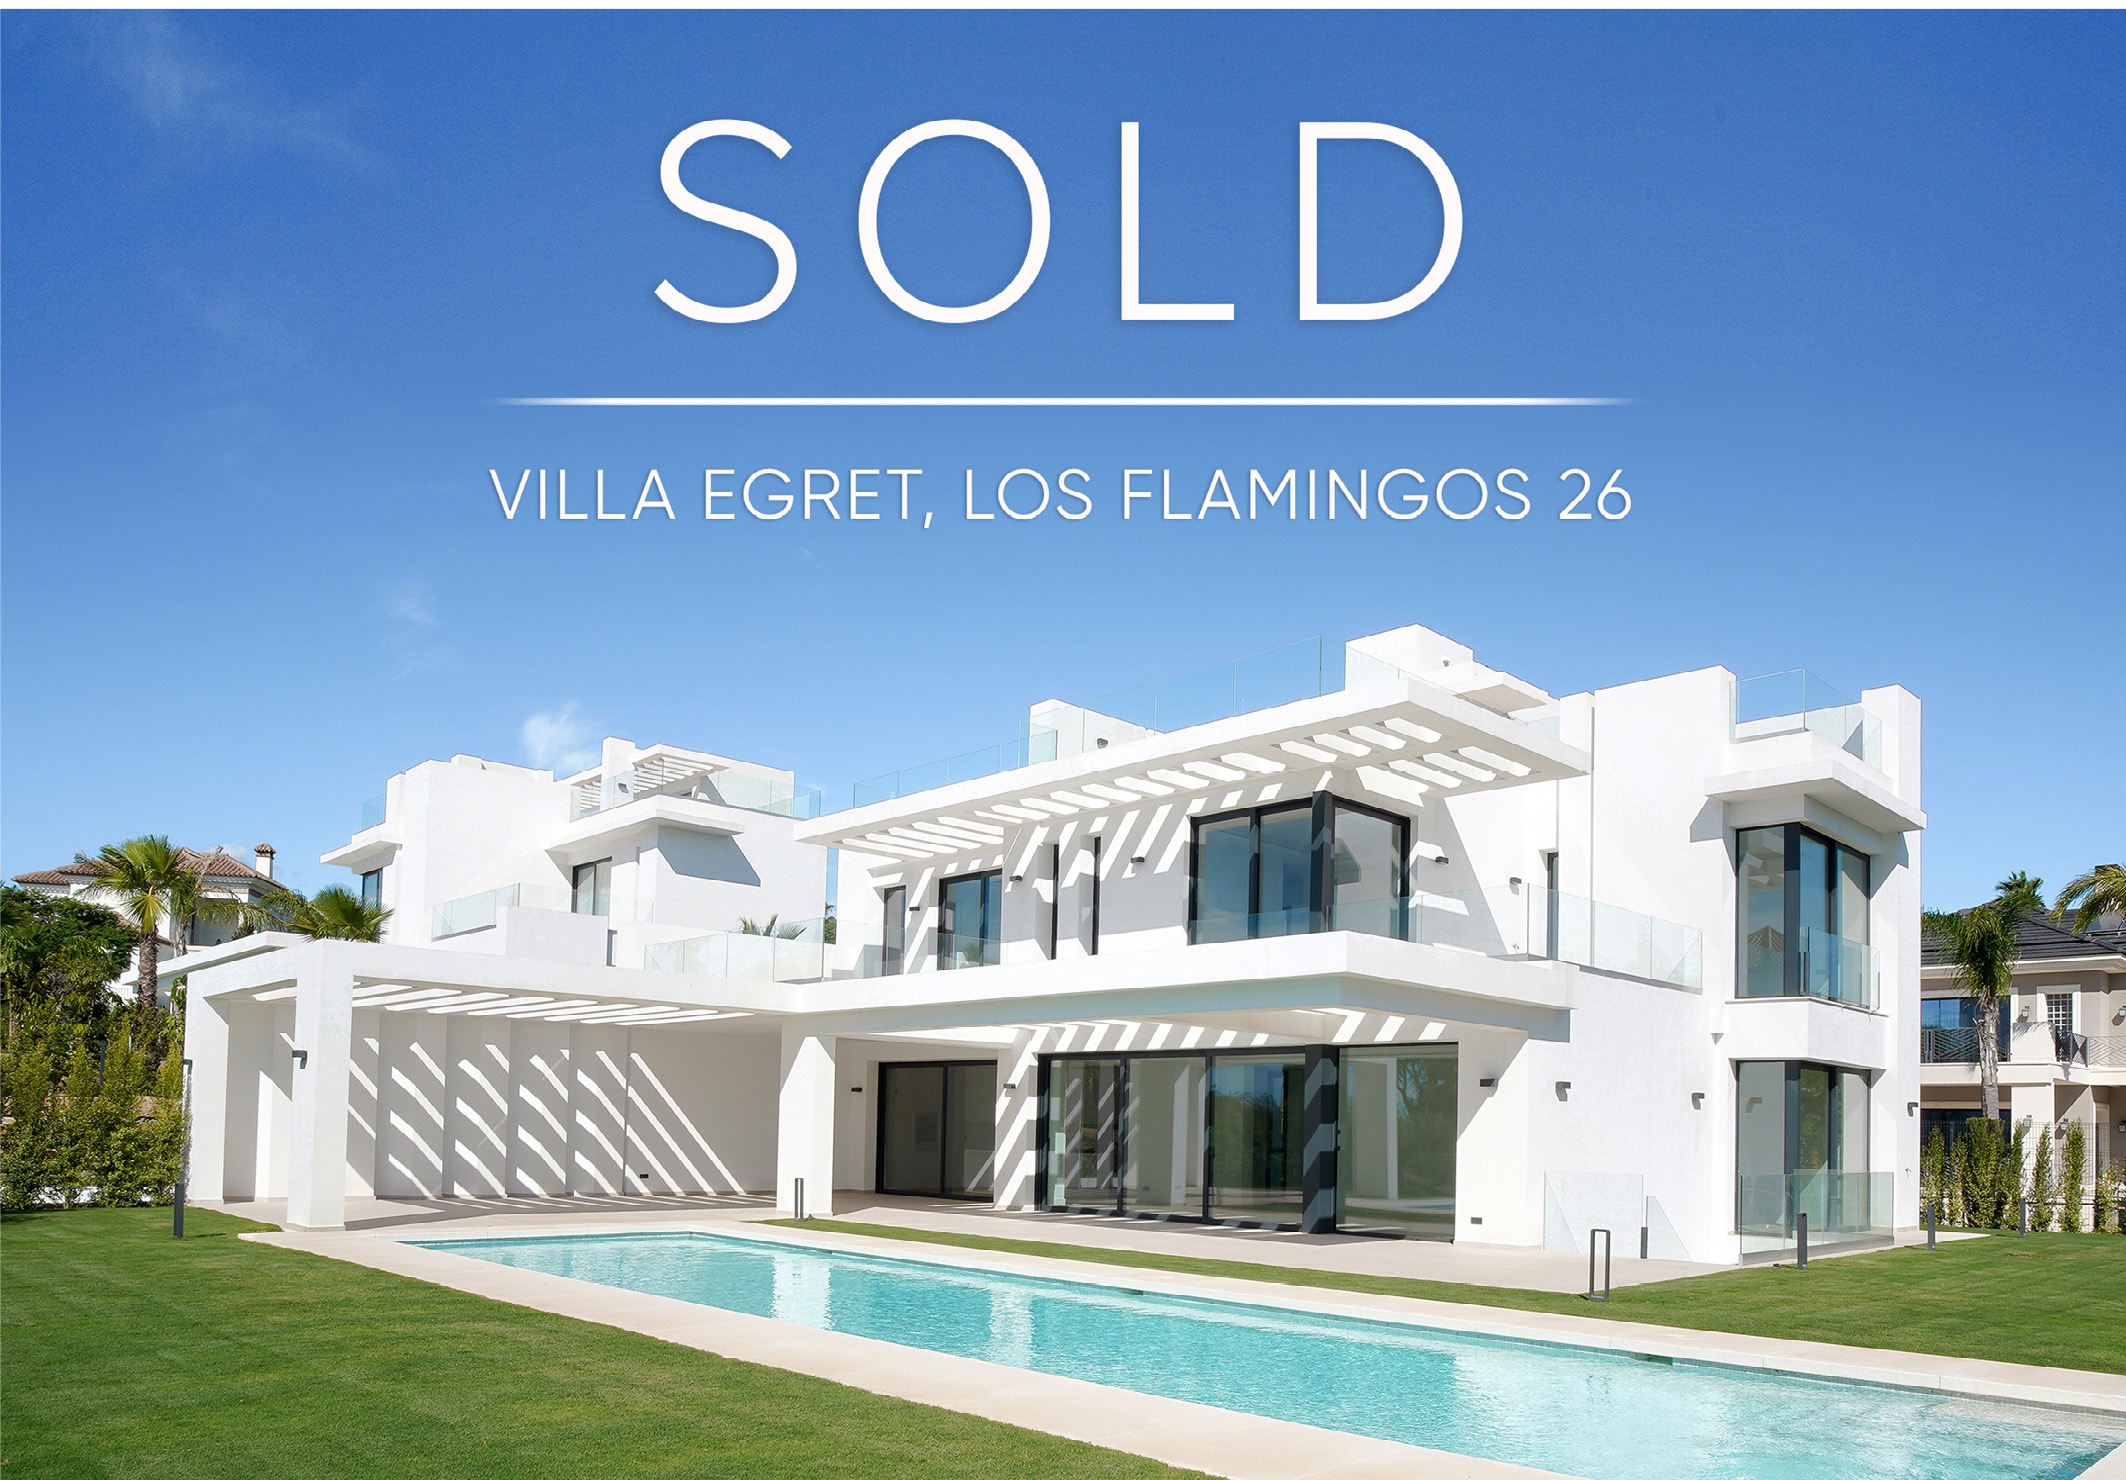 Villa Egret is Sold!